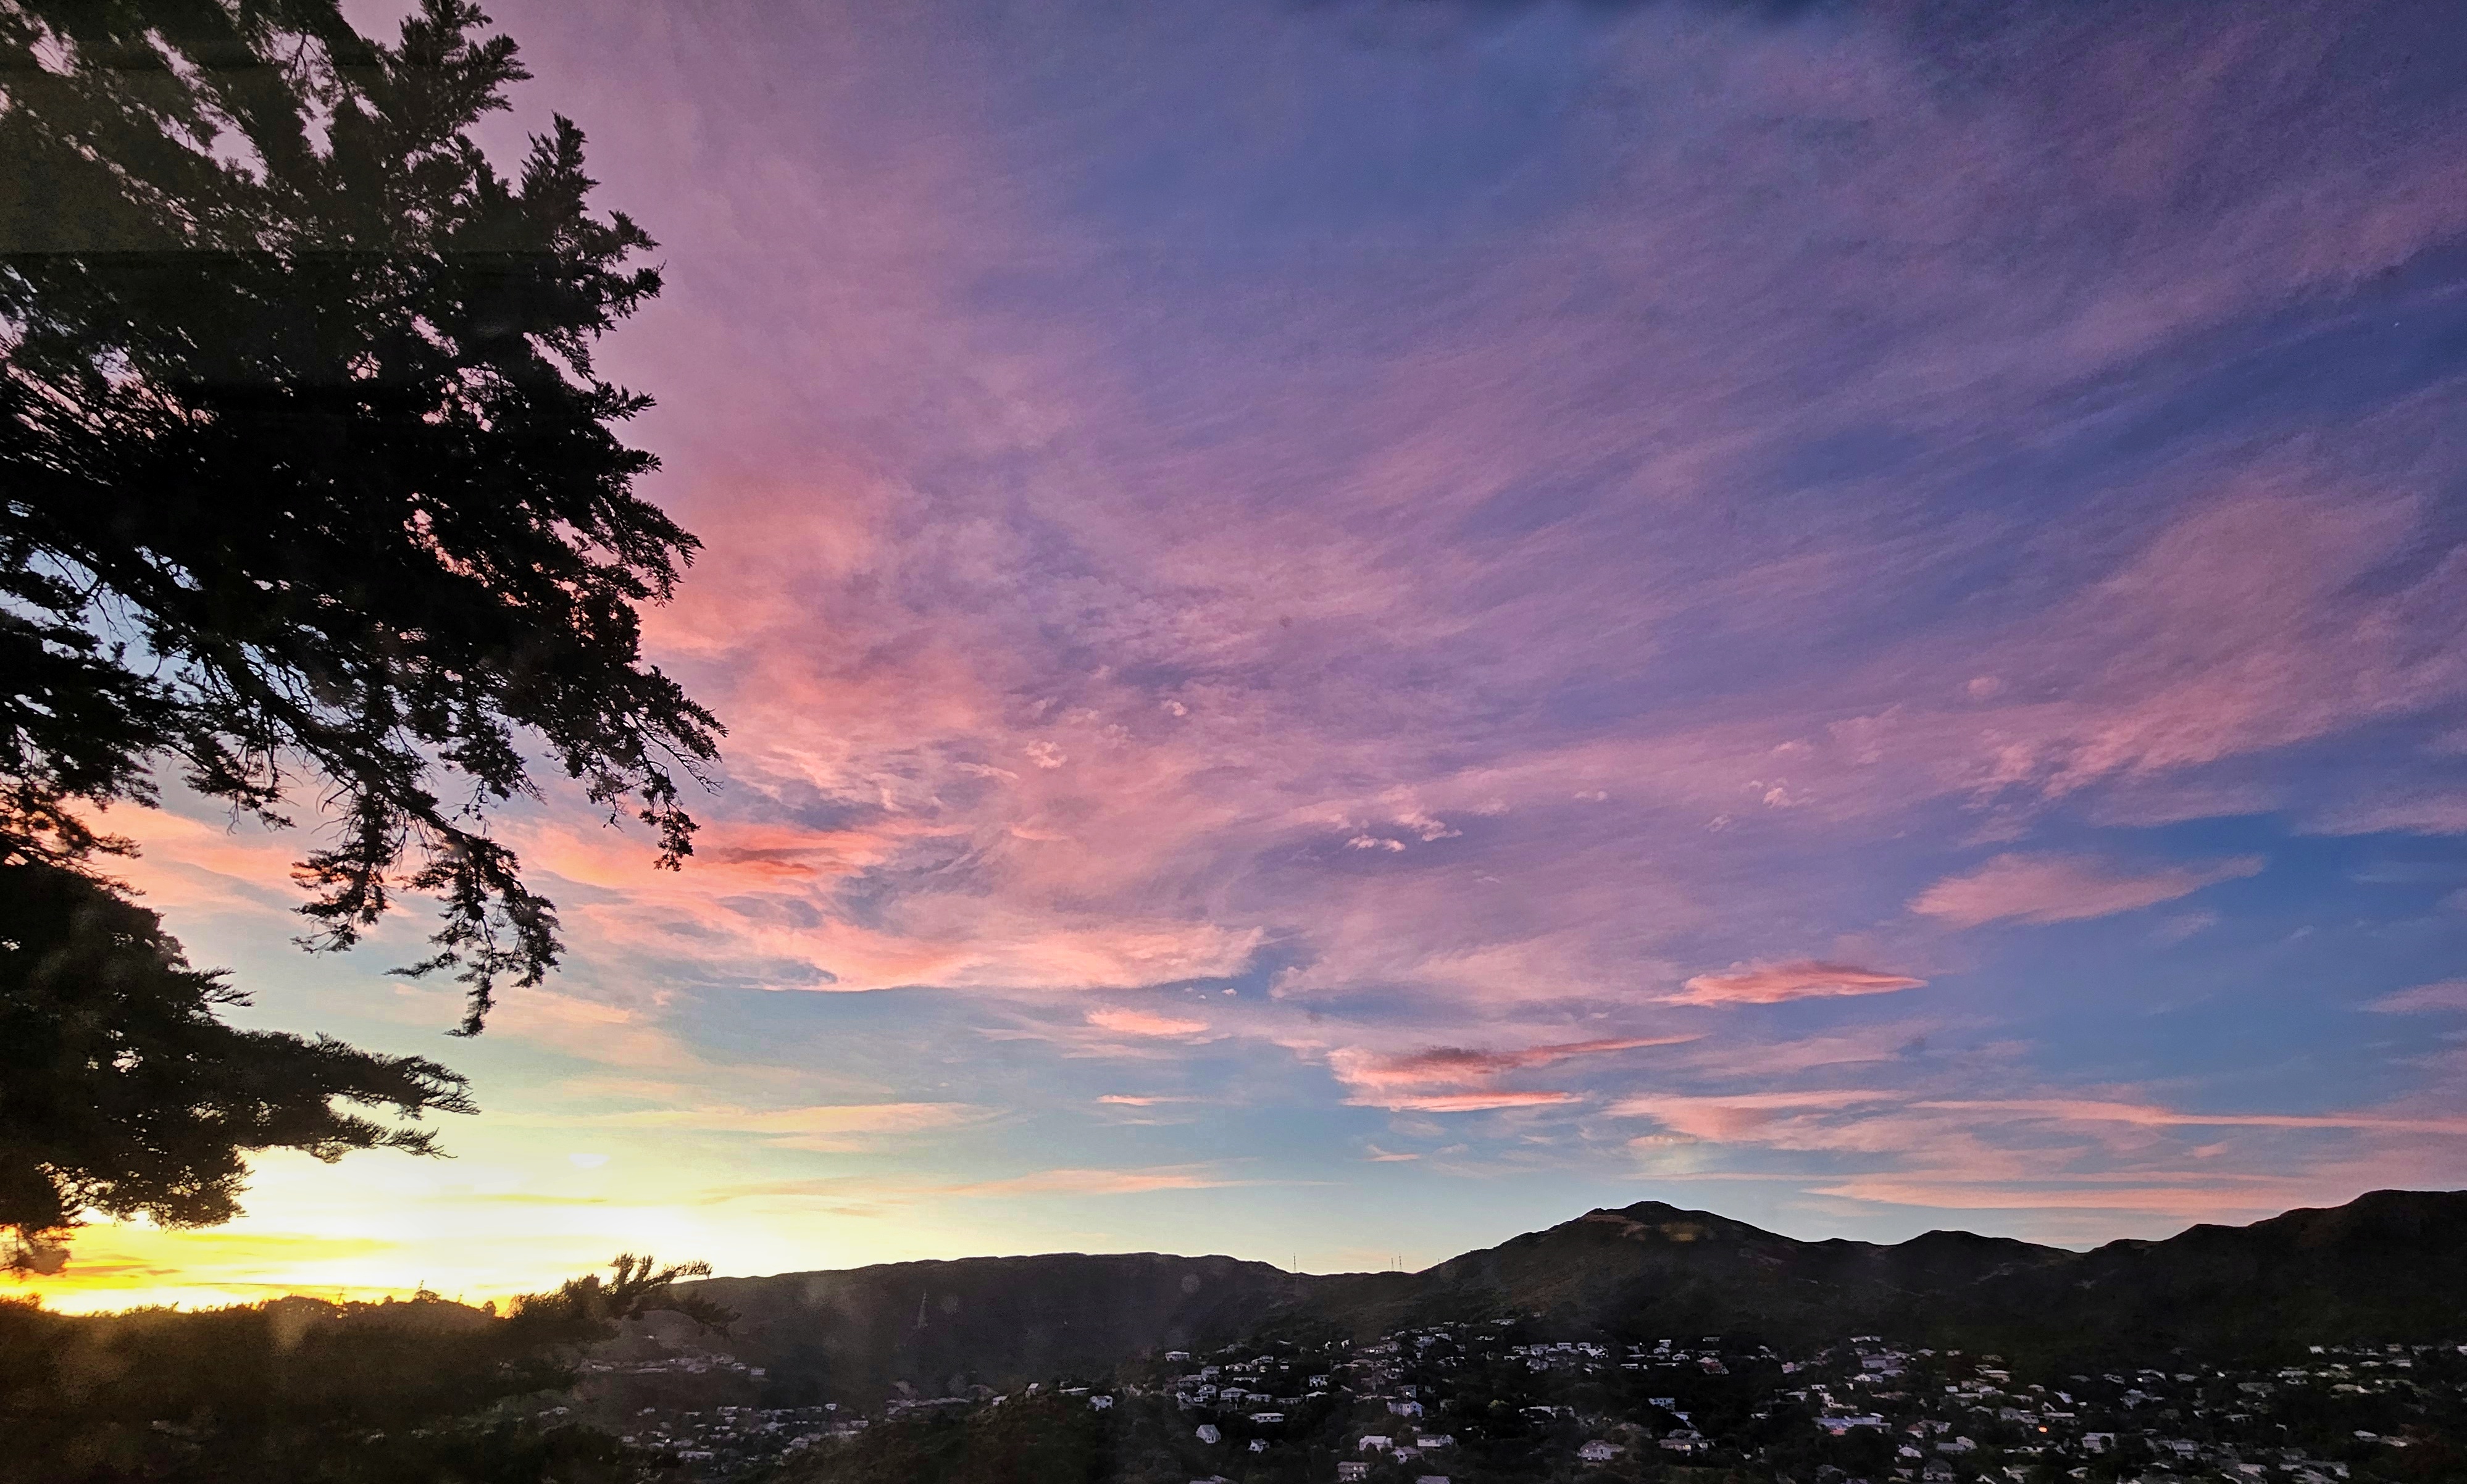 Pink sunset over hills